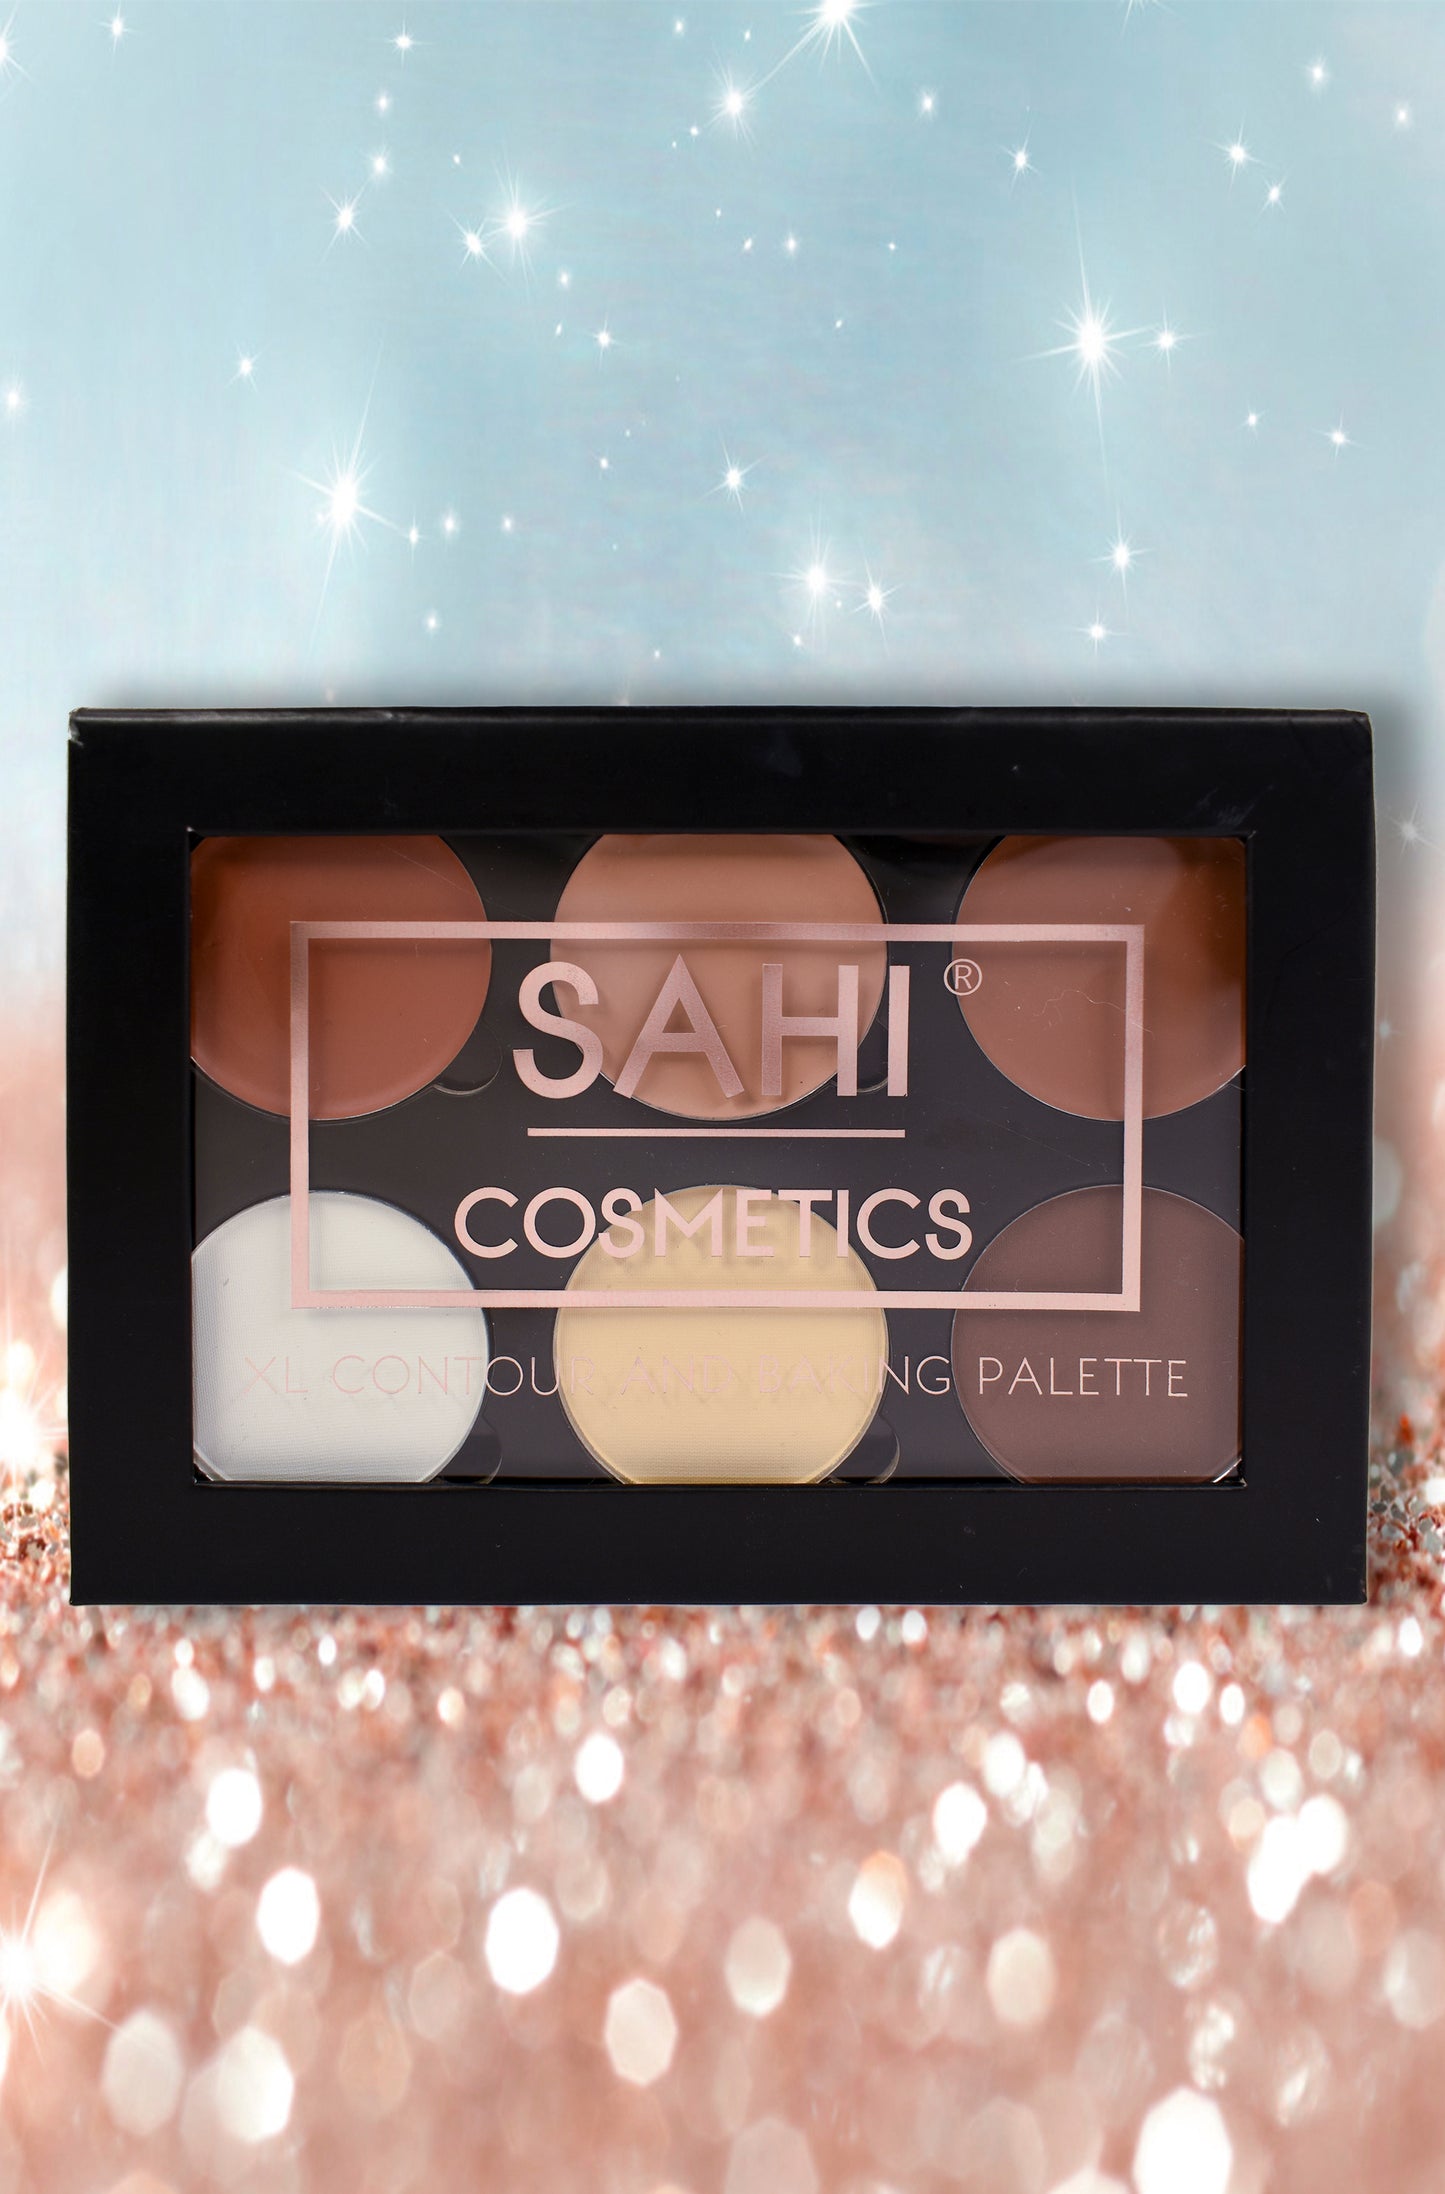 XL Contour and Baking Palette - Sahi Cosmetics